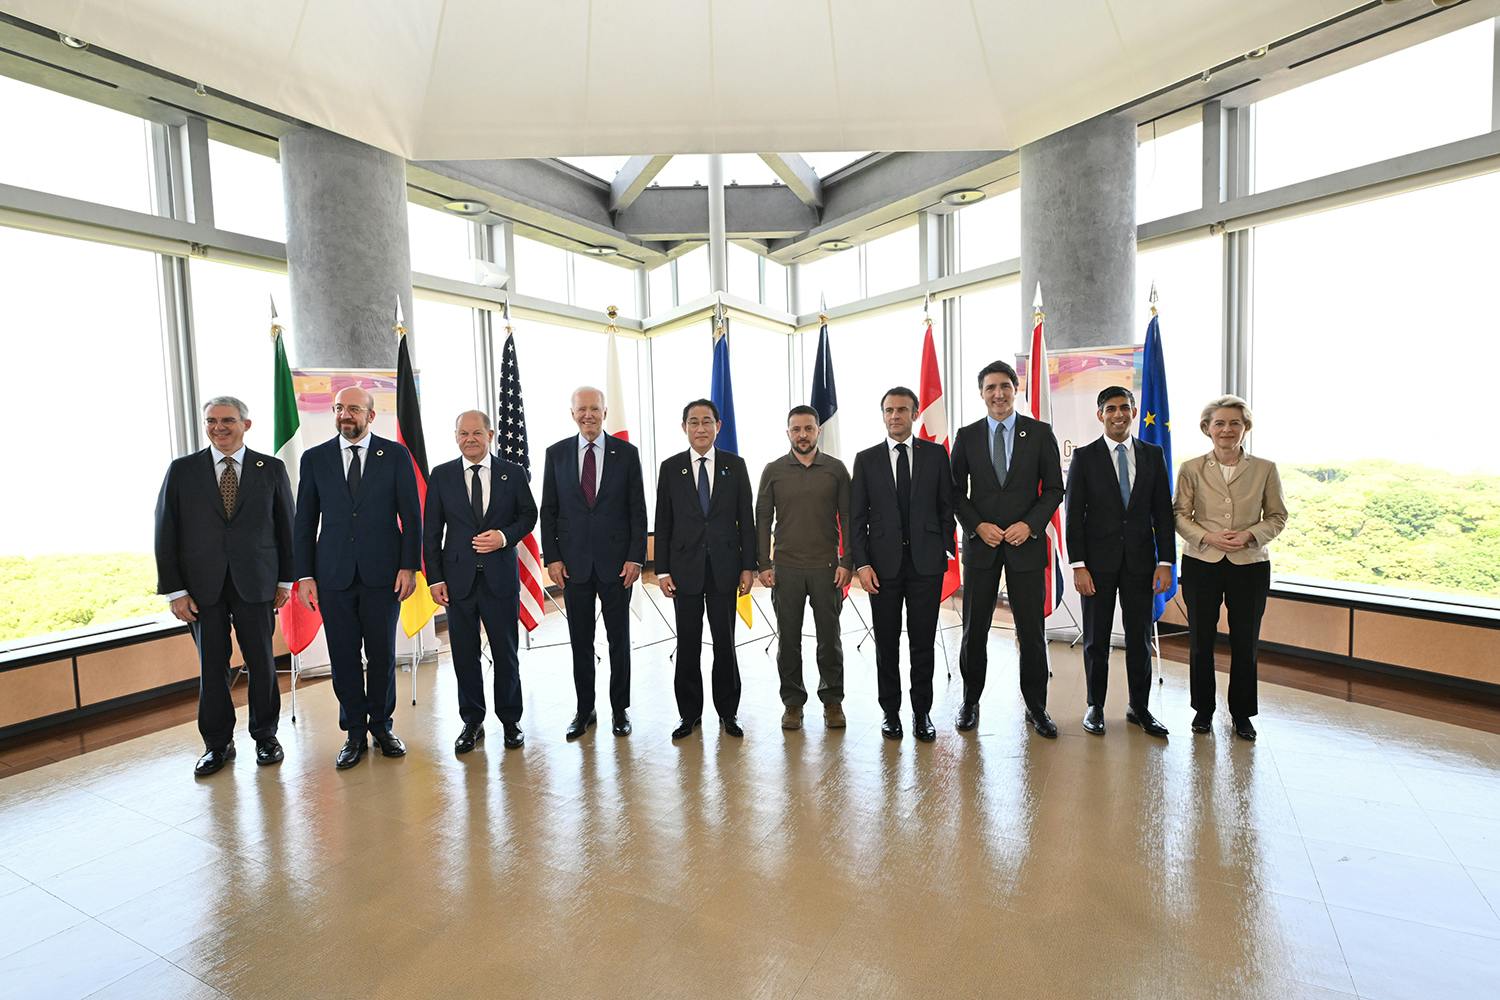 G7 leaders with Ukraine President at the 2023 G7 Summit, Hiroshima, Japan. Photo courtesy G7.